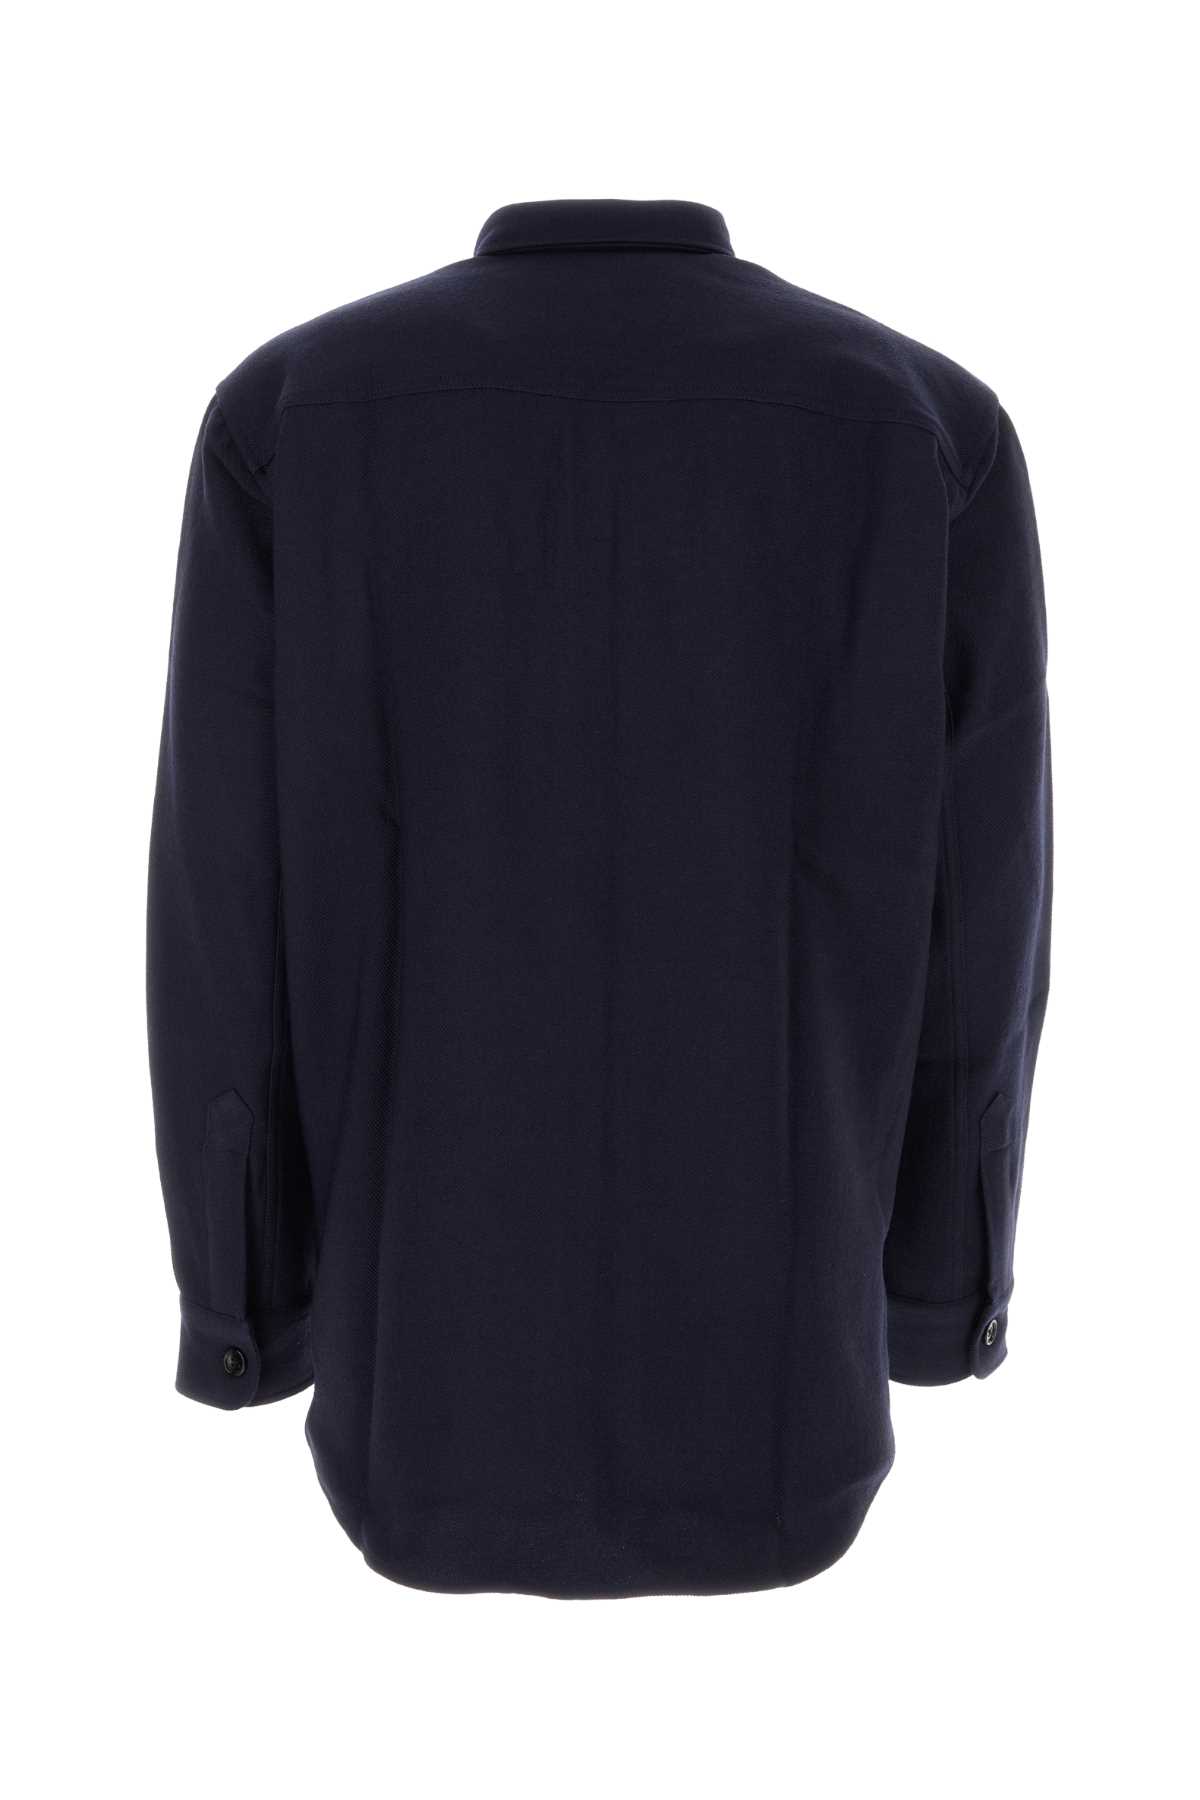 Ami Alexandre Mattiussi Blue Wool Oversize Shirt In Nightblue